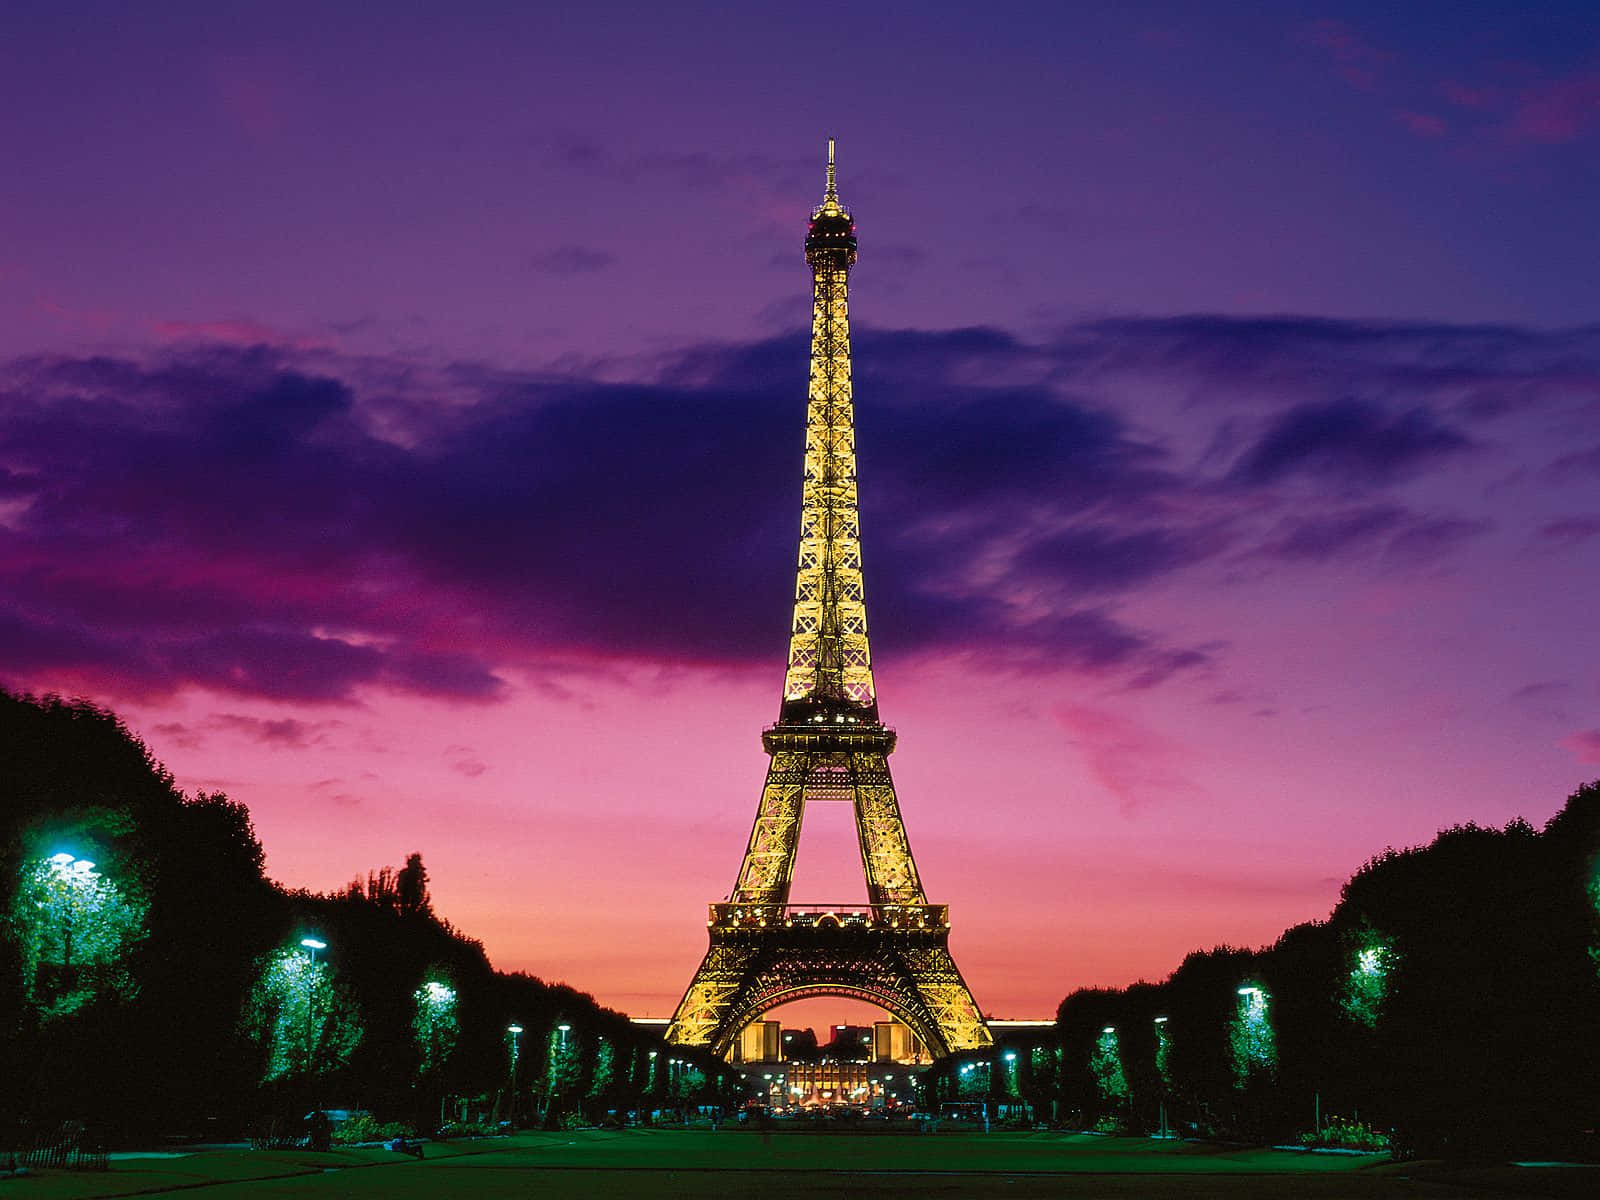 Eiffeltornetlyser Upp Vid Skymning.